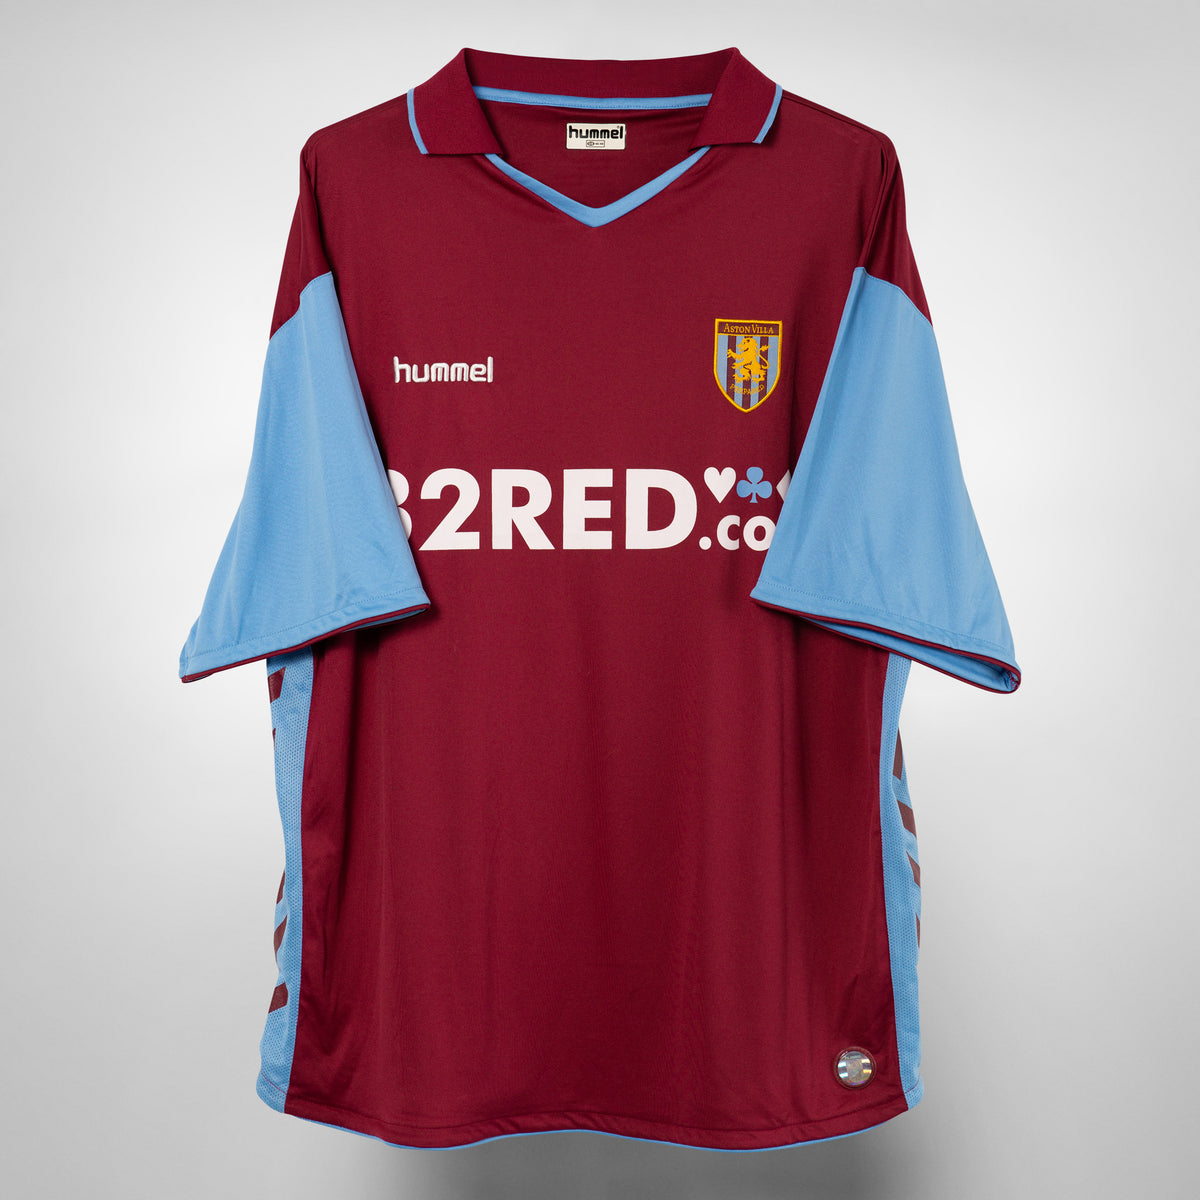 2006-2007 Aston Villa Home Shirt Gareth Barry 6